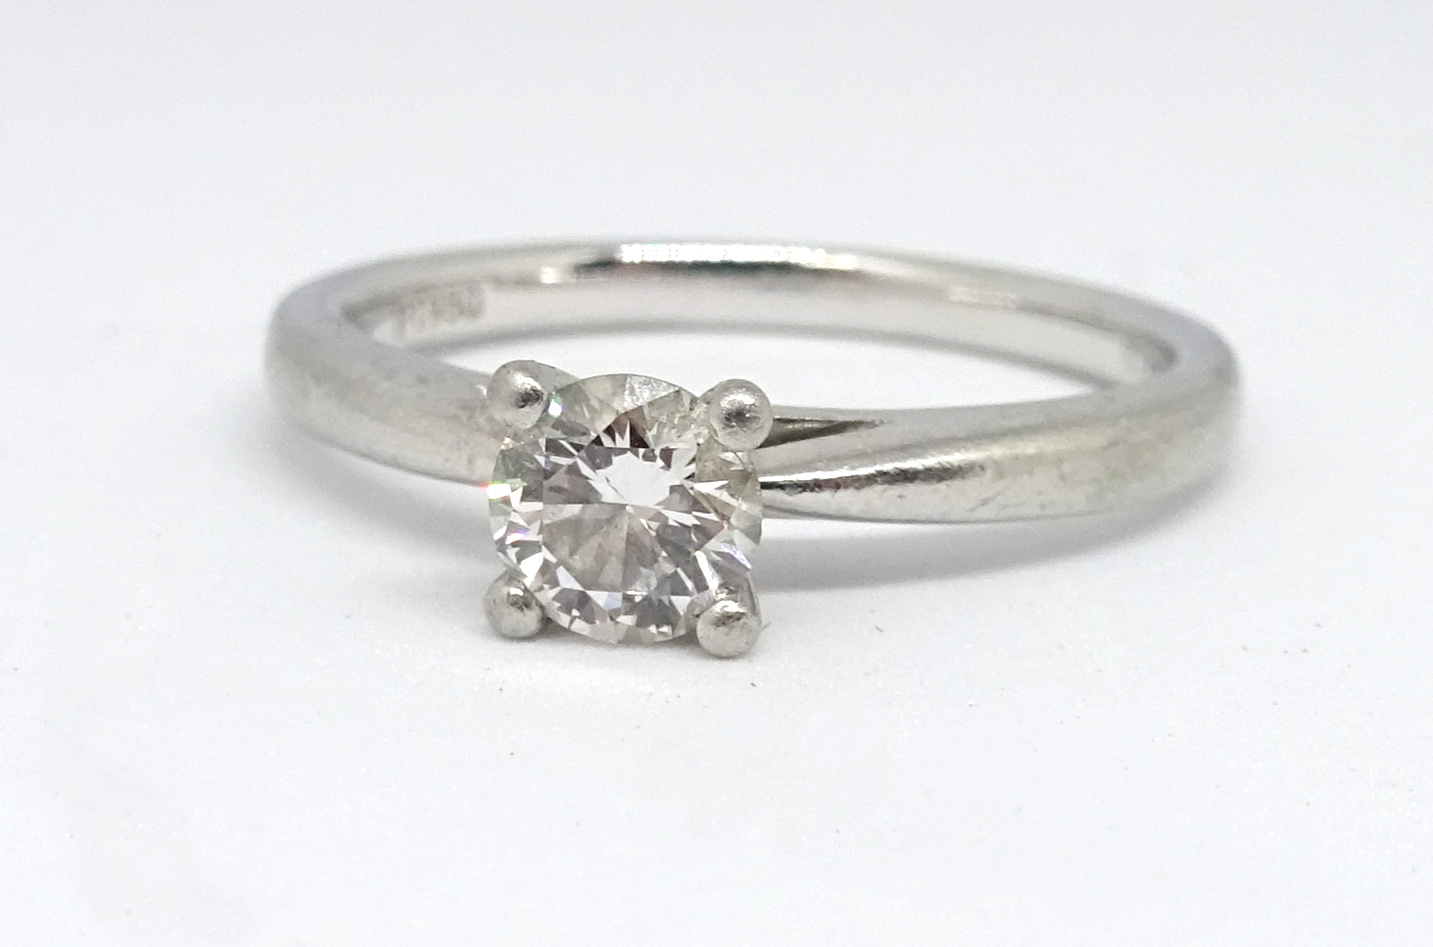 A Brilliant Fire platinum diamond solitaire ring, with IGI certificate indicating 0.40 carat